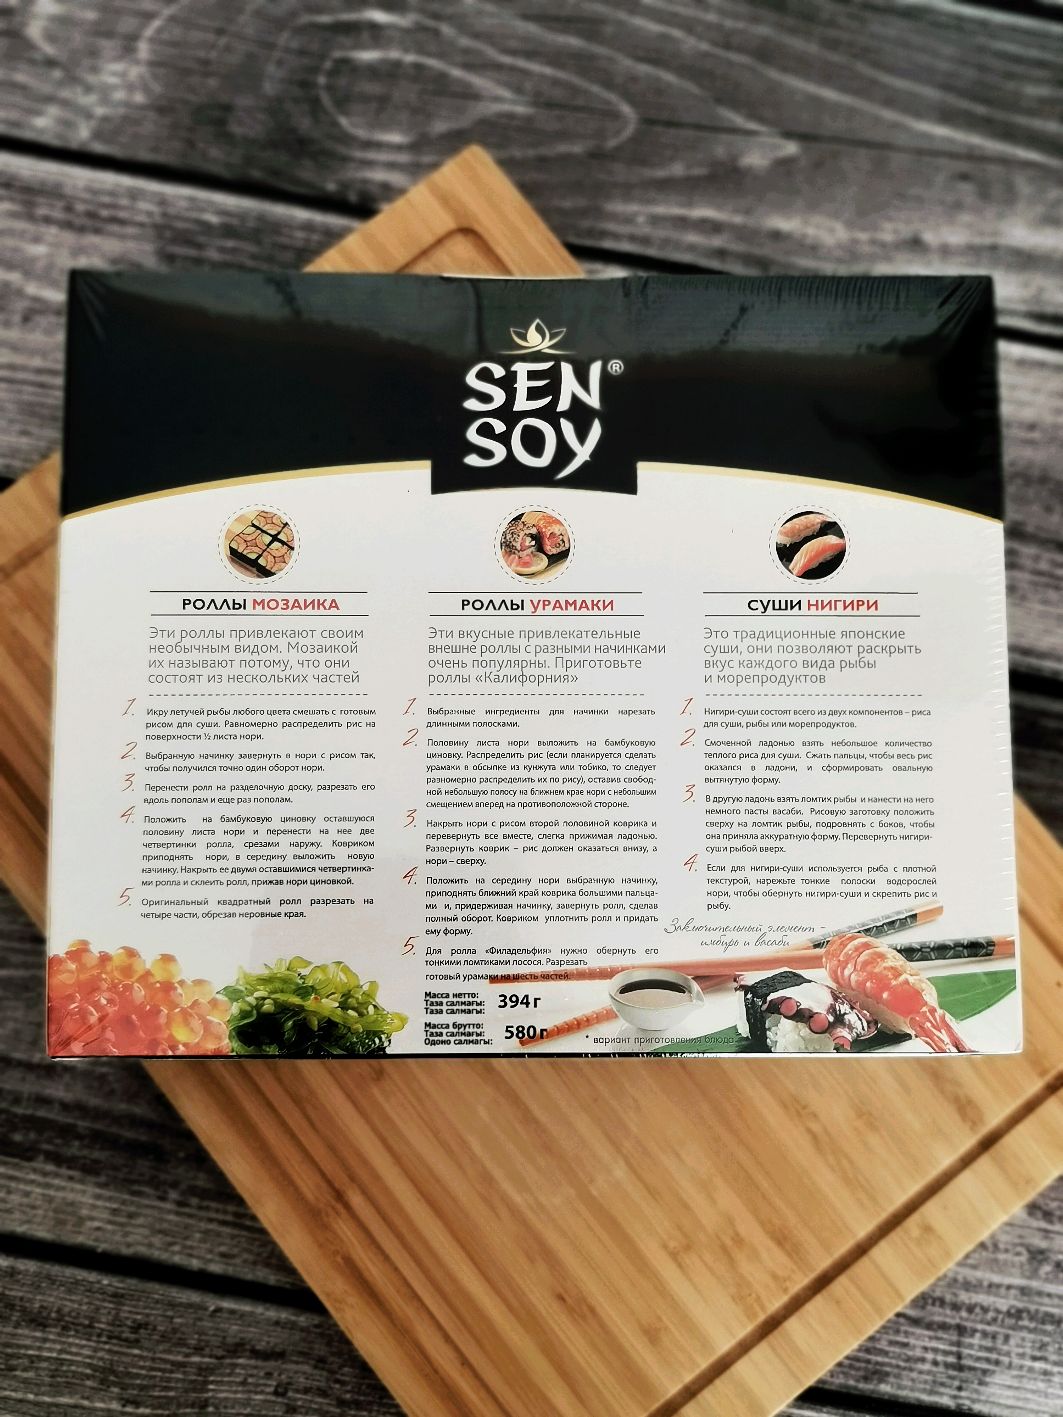 Sen soy набор для суши цена фото 99